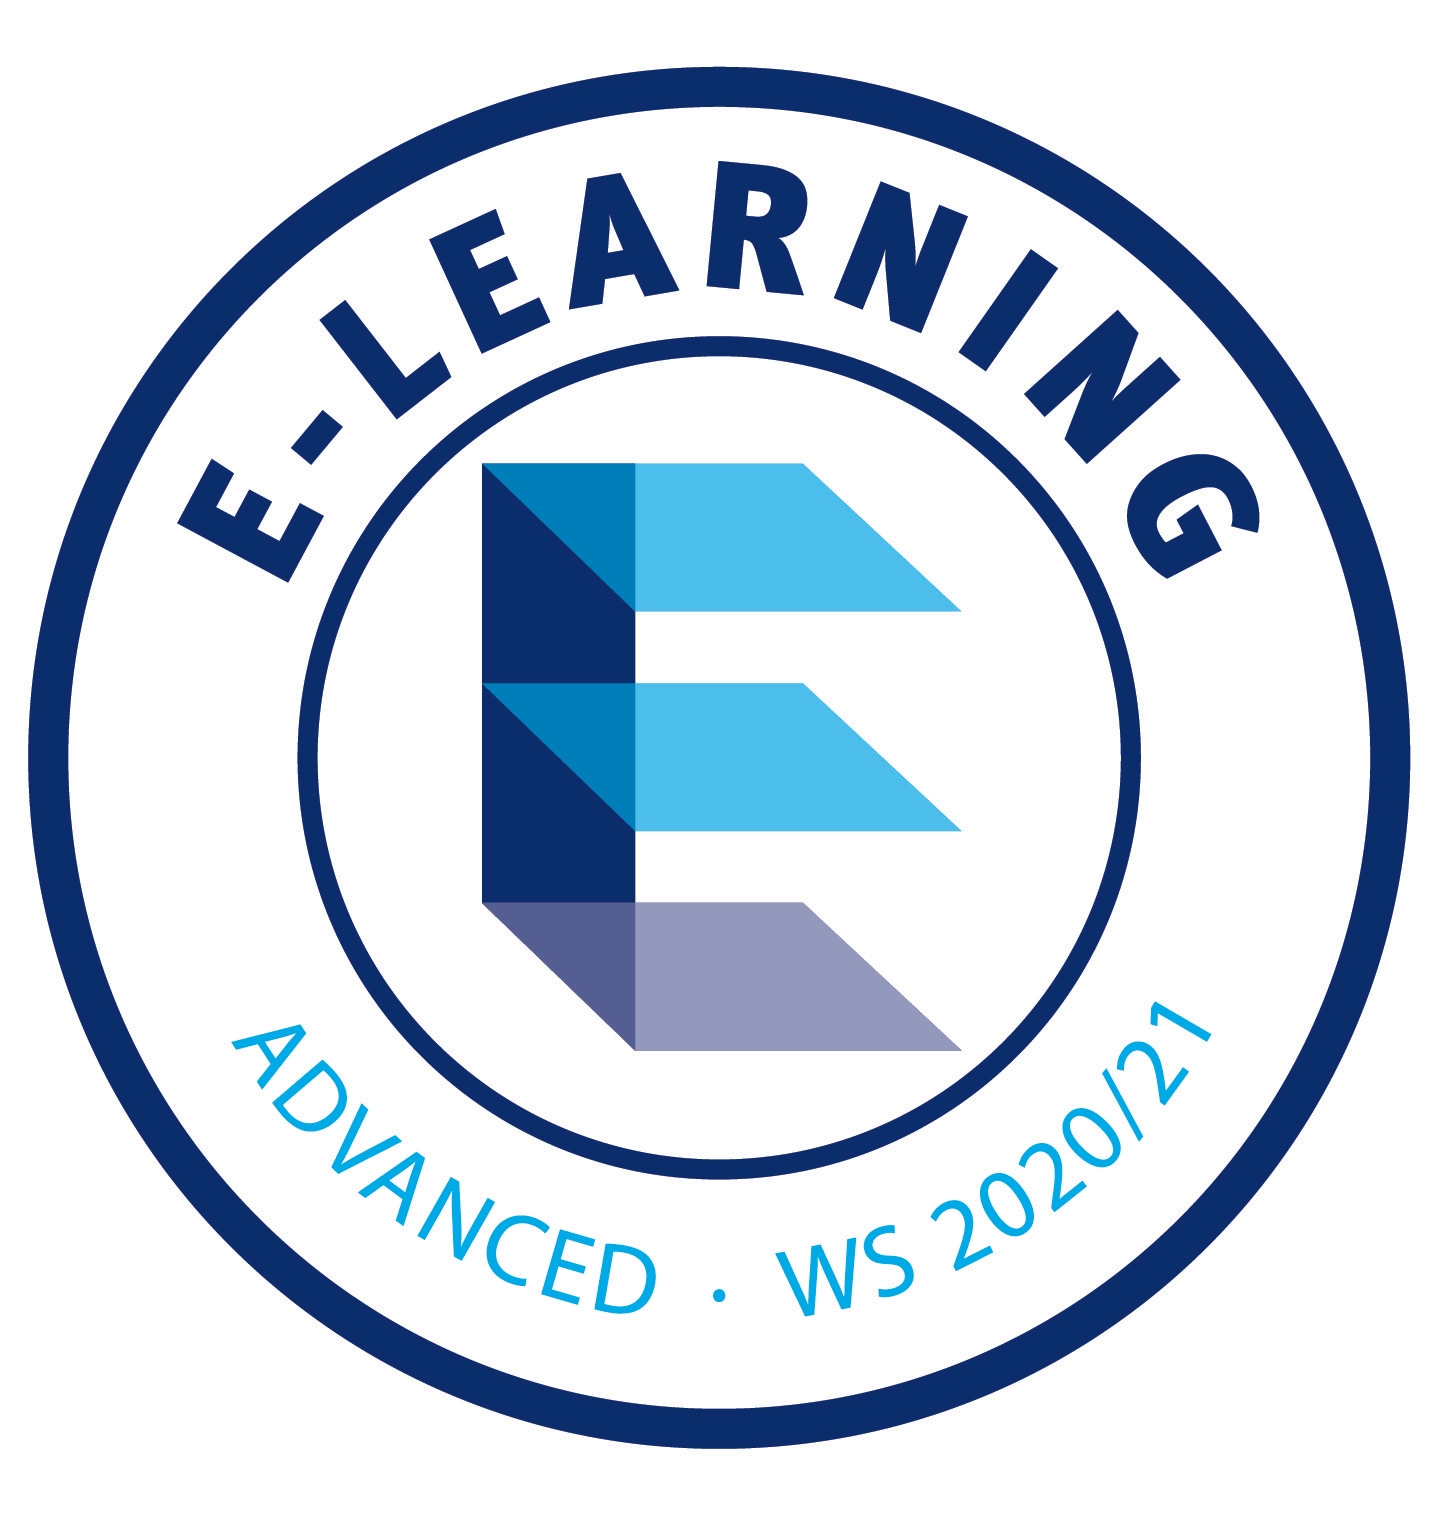 E-Learning Label GET A Wintersemester 2019/20